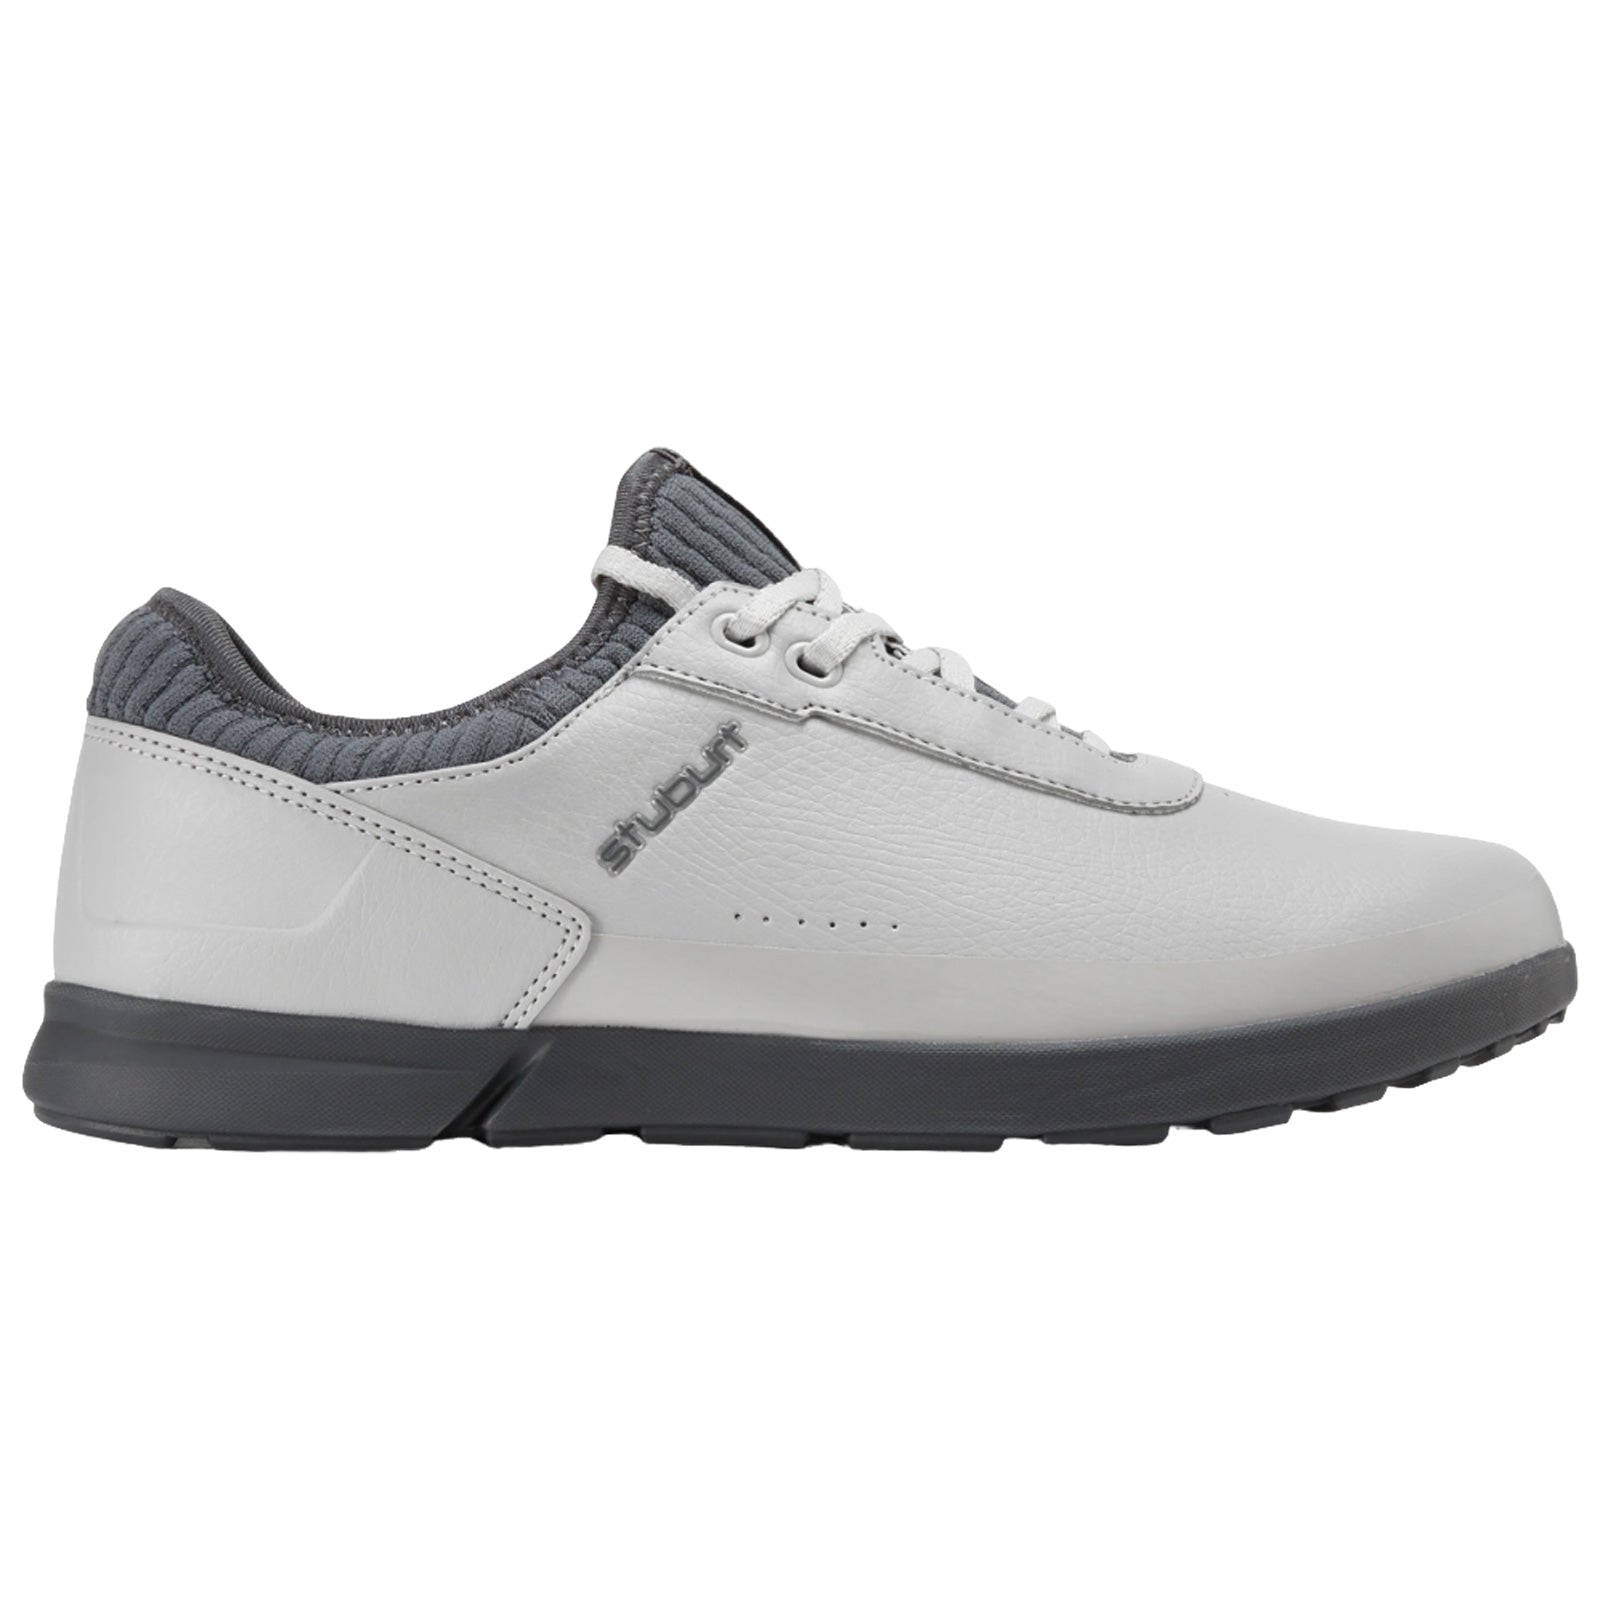 Stuburt Mens Evolution Casual Golf Shoes